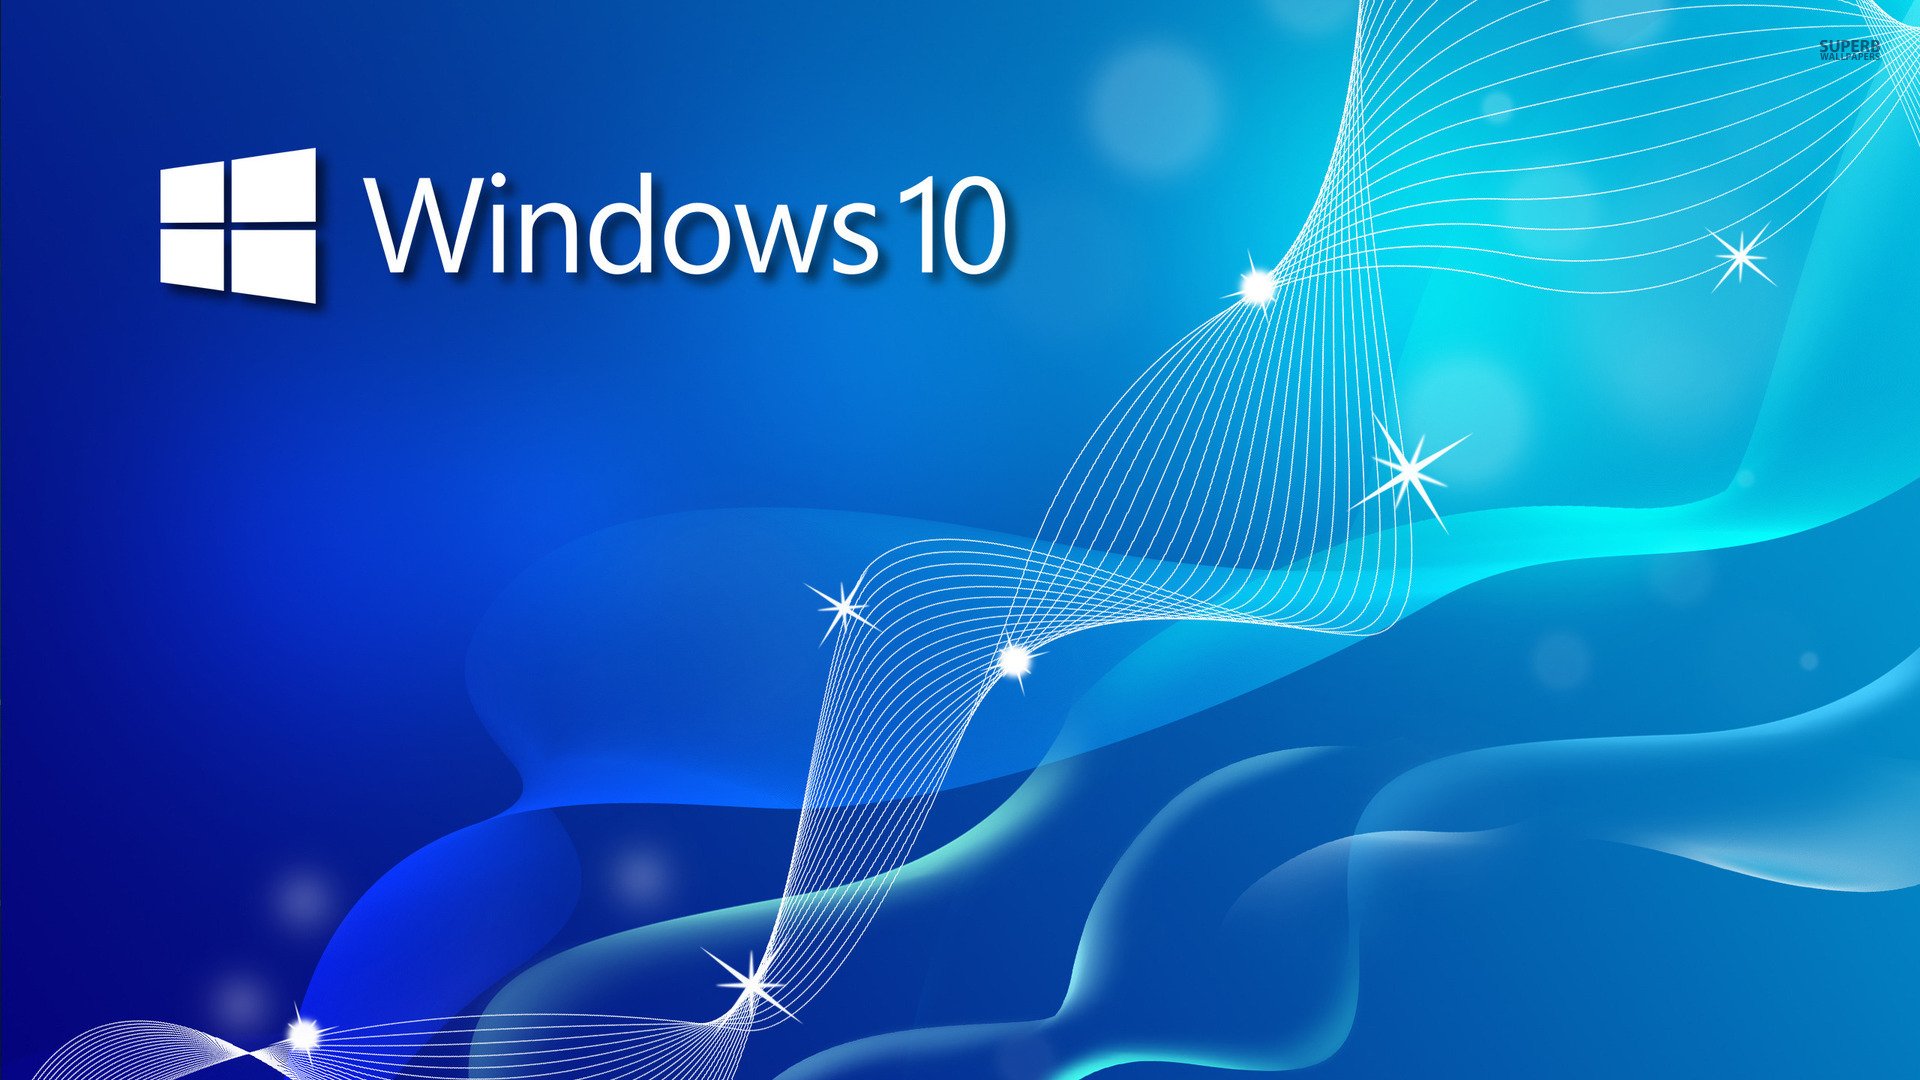 Download windows 10 background wallpaper ethernet driver windows 7 64 bit download